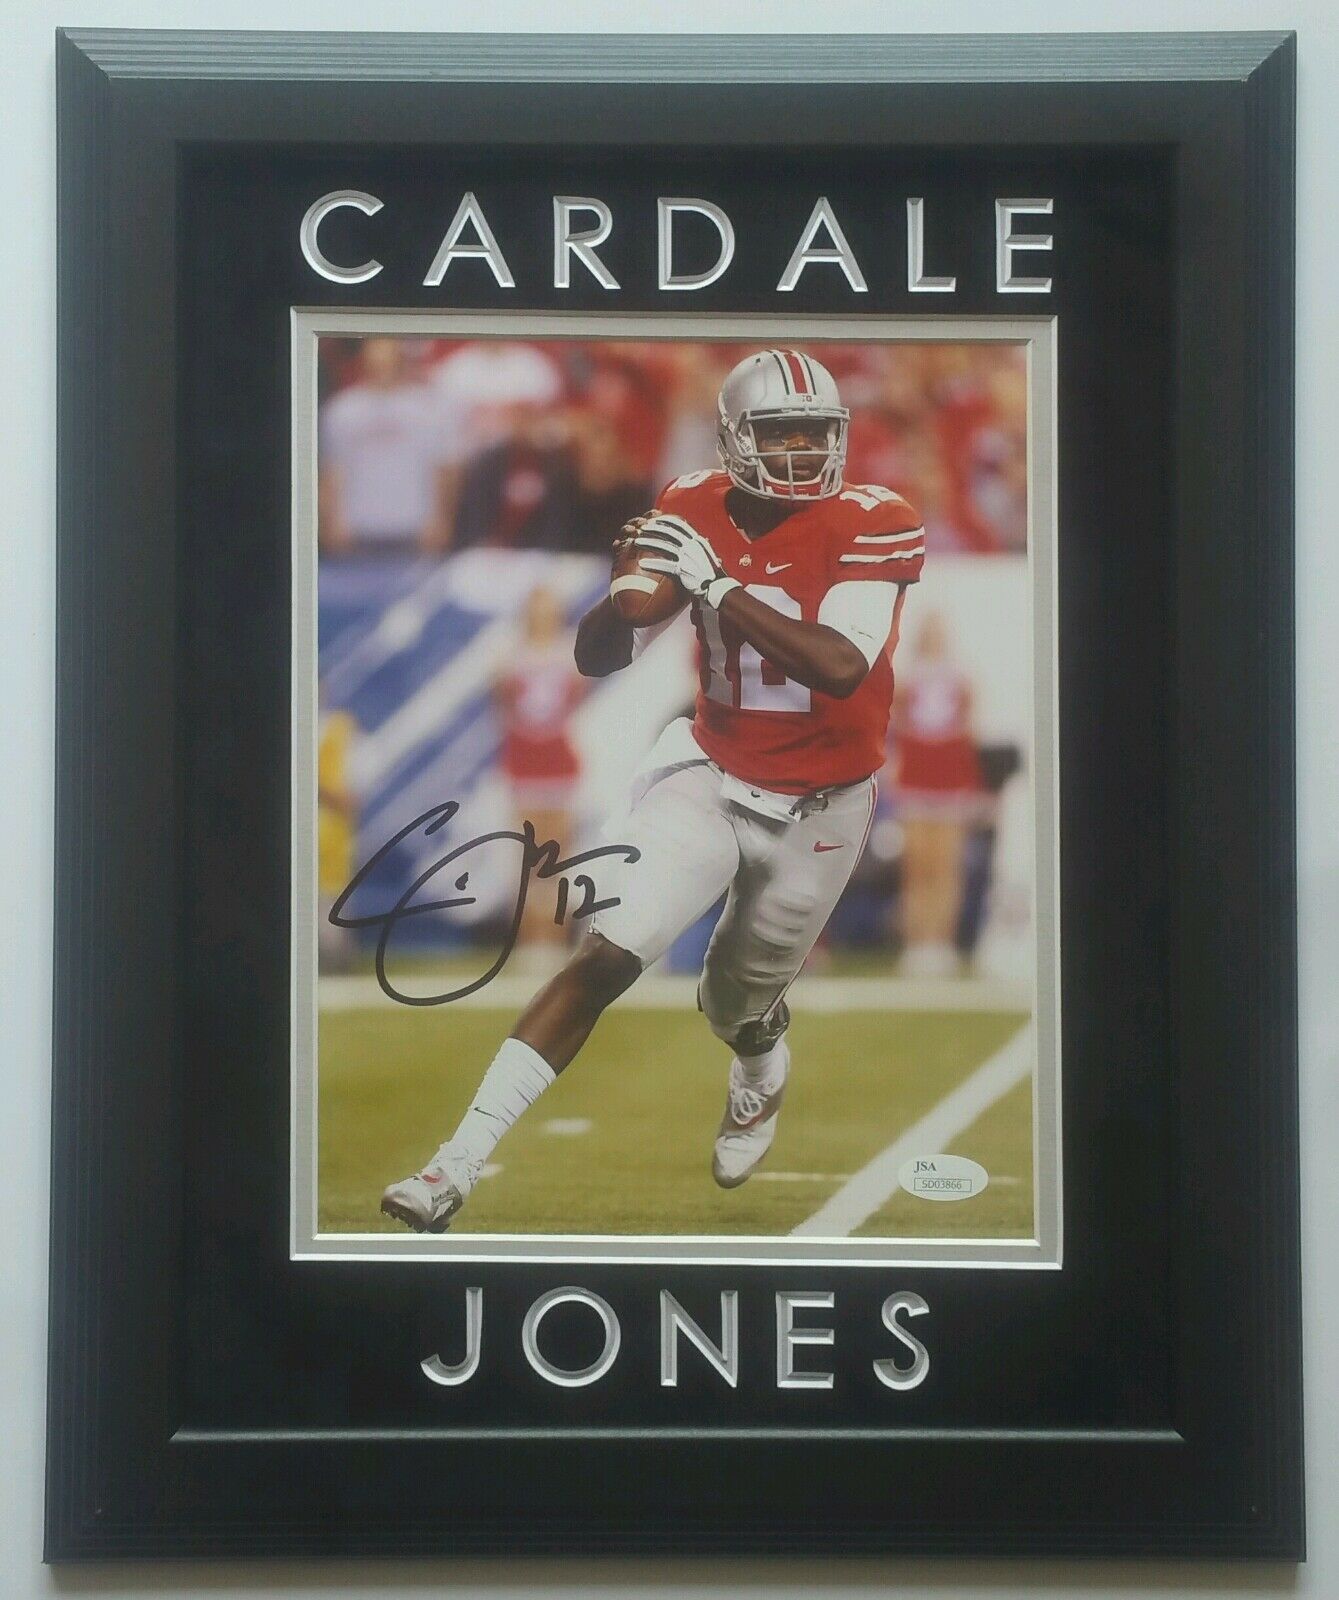 Cardale Jones Authentic Signed Framed 8x10 Photo Autographed JSA